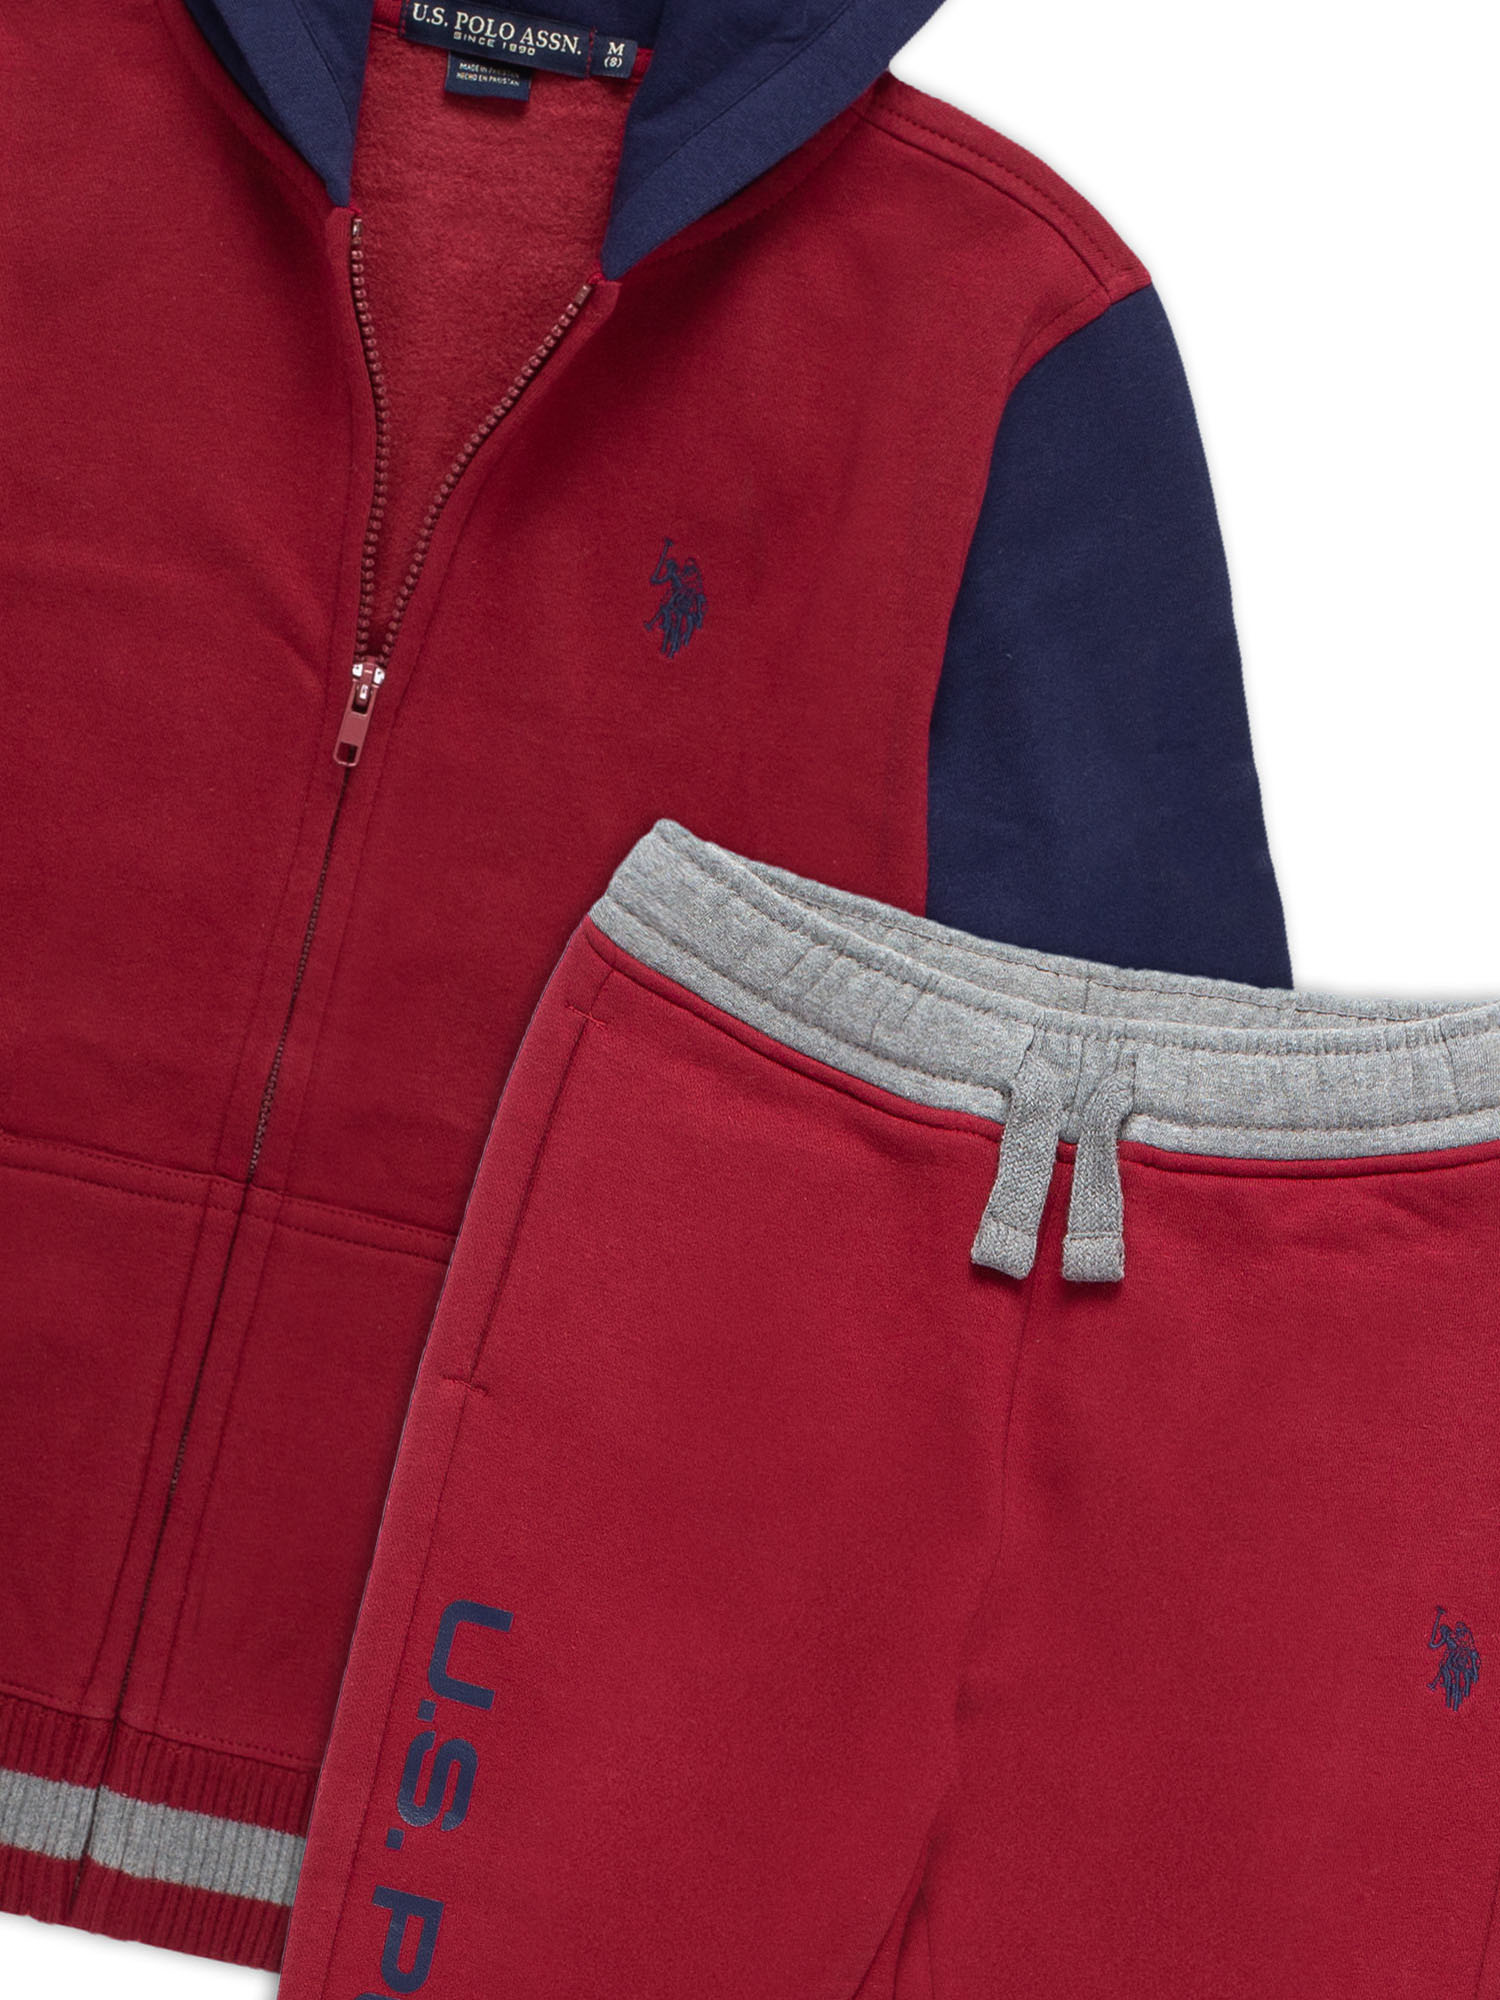 U.S. Polo Boys Fleece Colorblock Zip up Hoodie & Sweatpant Set , 2-Pack, Sizes 4-18 - image 2 of 7